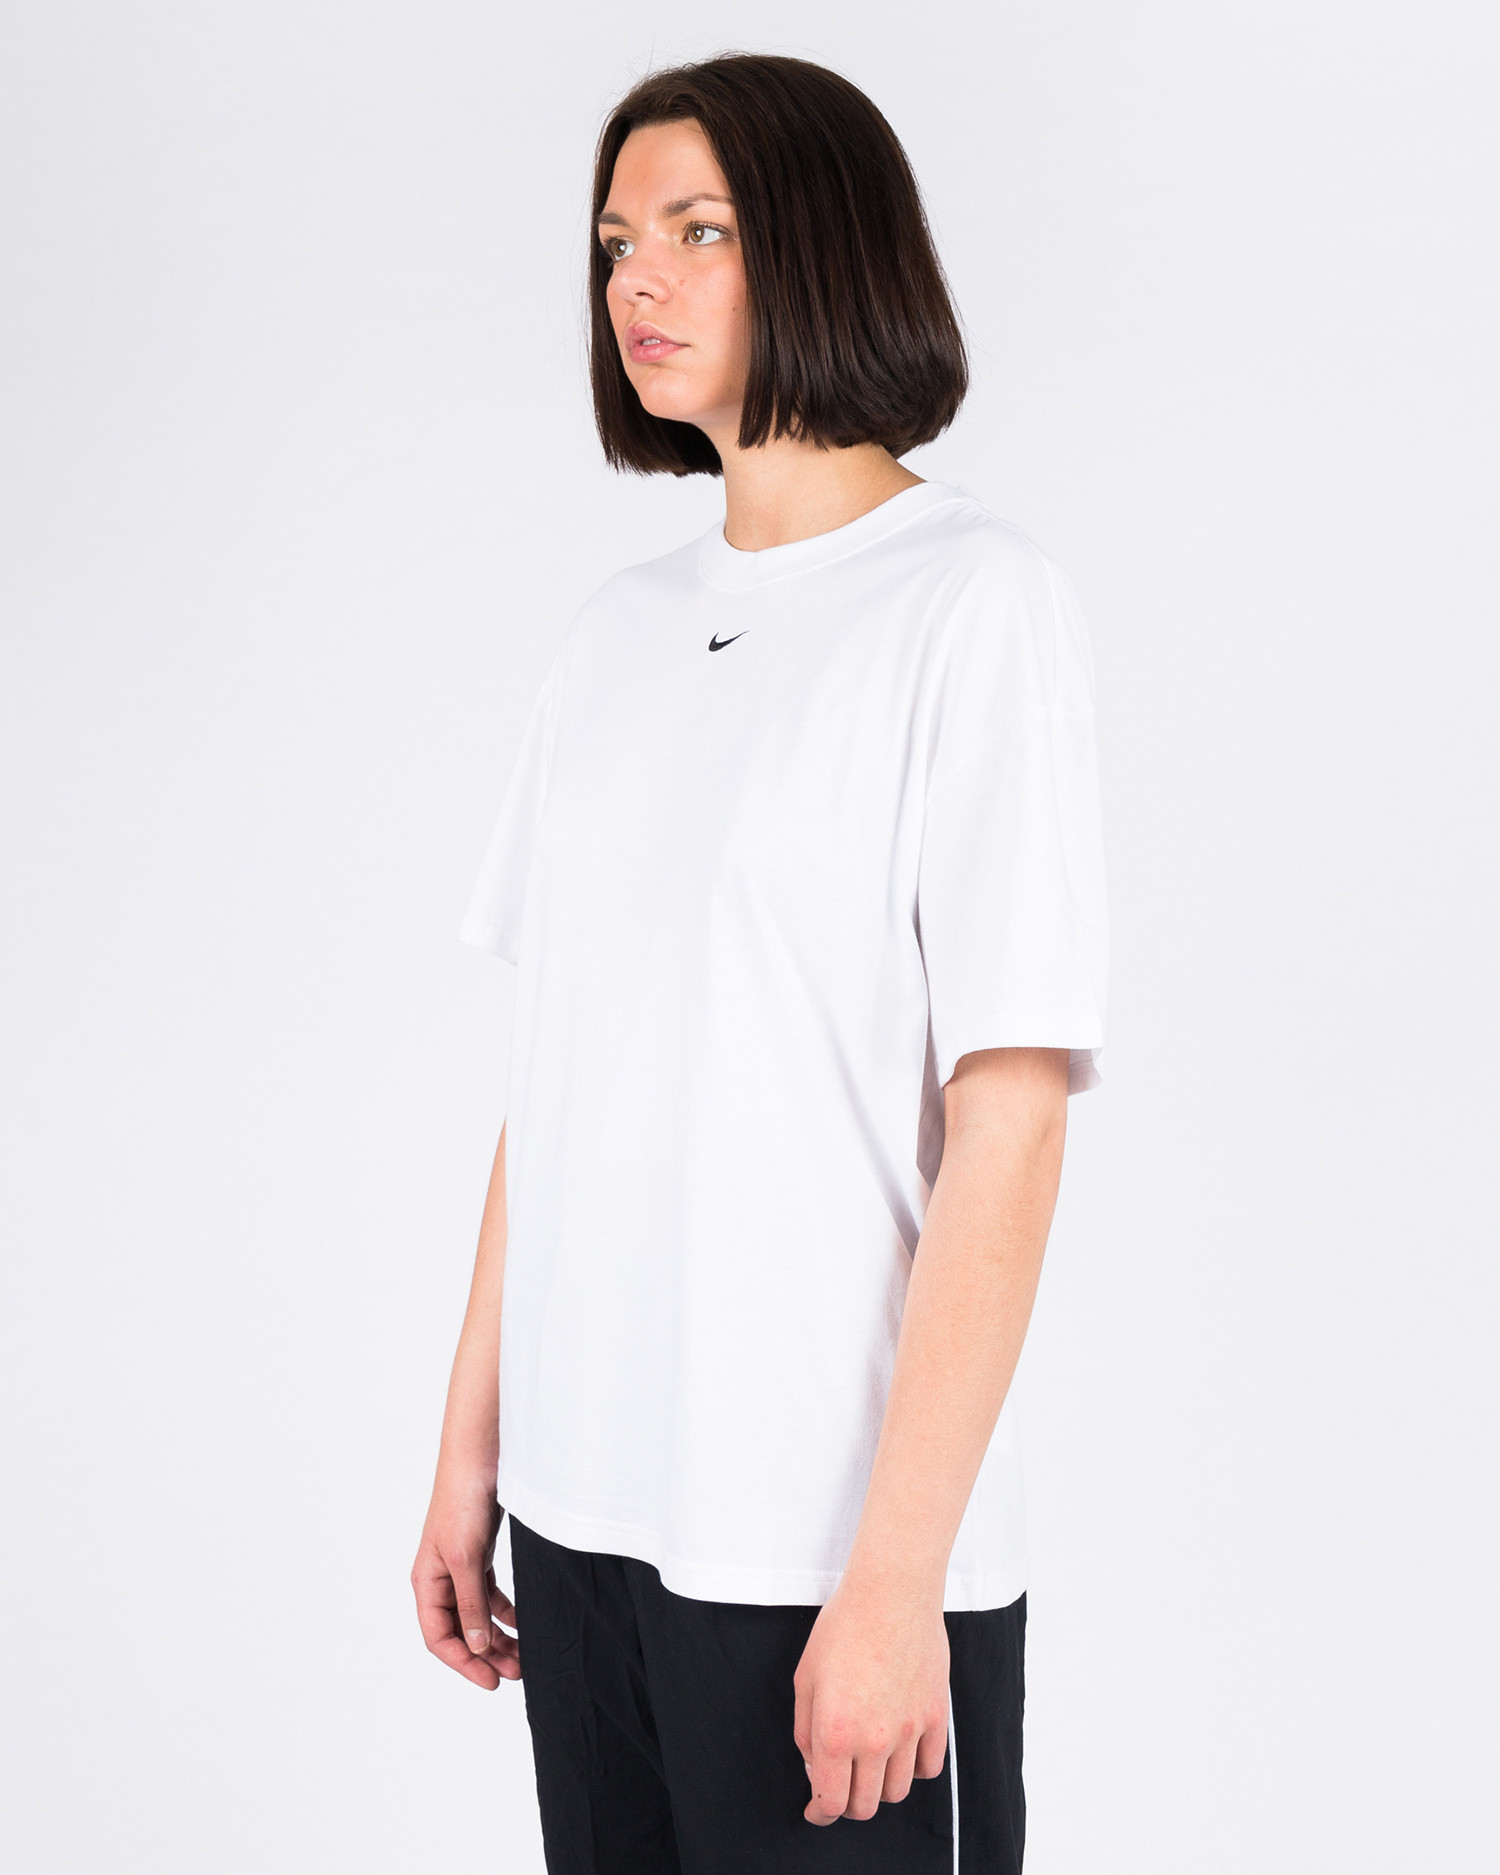 White Black Button Shirts Buyudum Cocuk Oldum - how to copy shirts and pants on roblox 2019 buyudum cocuk oldum